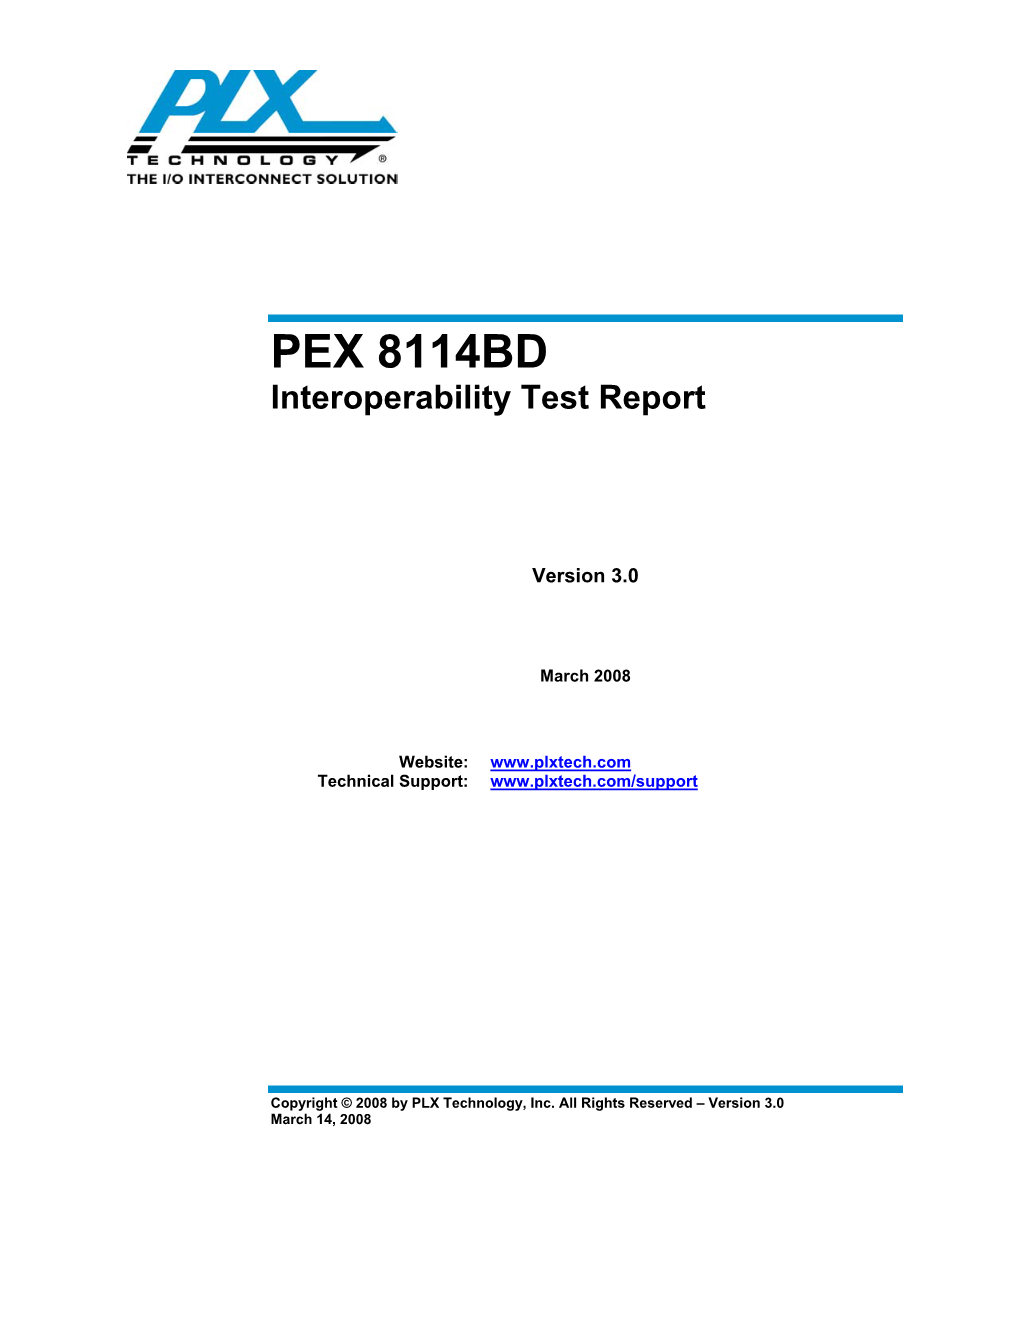 PEX 8114BD Interoperability Test Report